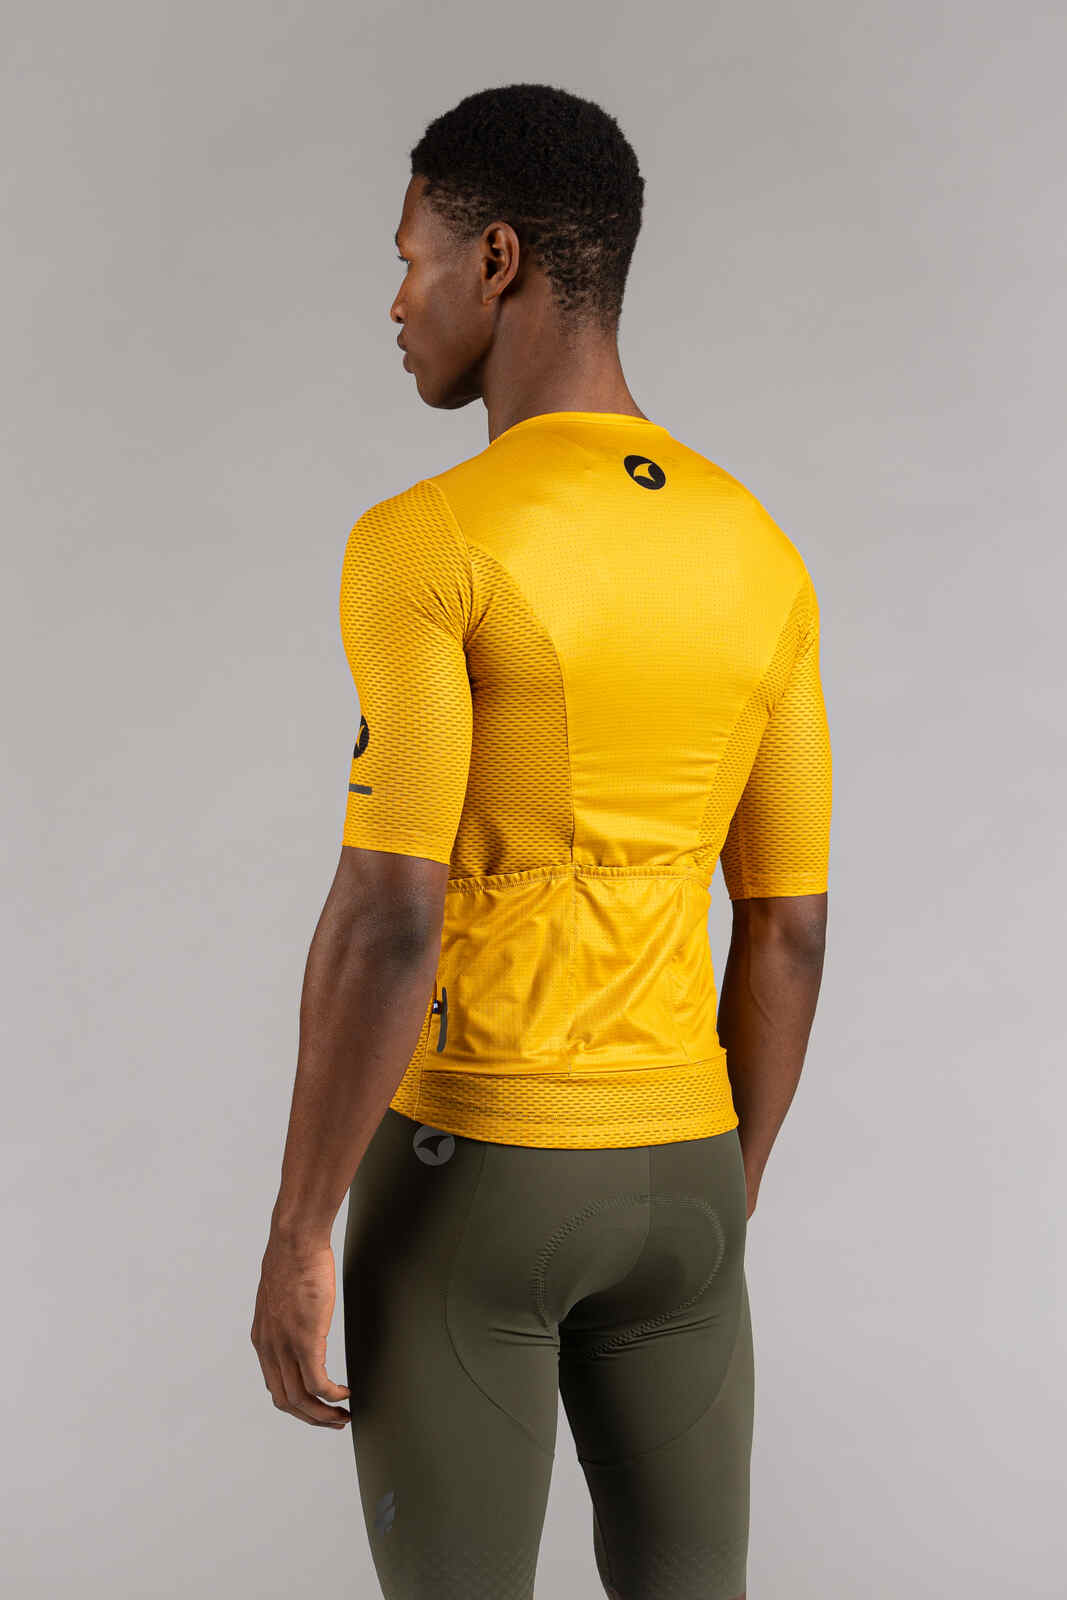 Men's Golden Yellow Mesh Cycling Jersey - Back View